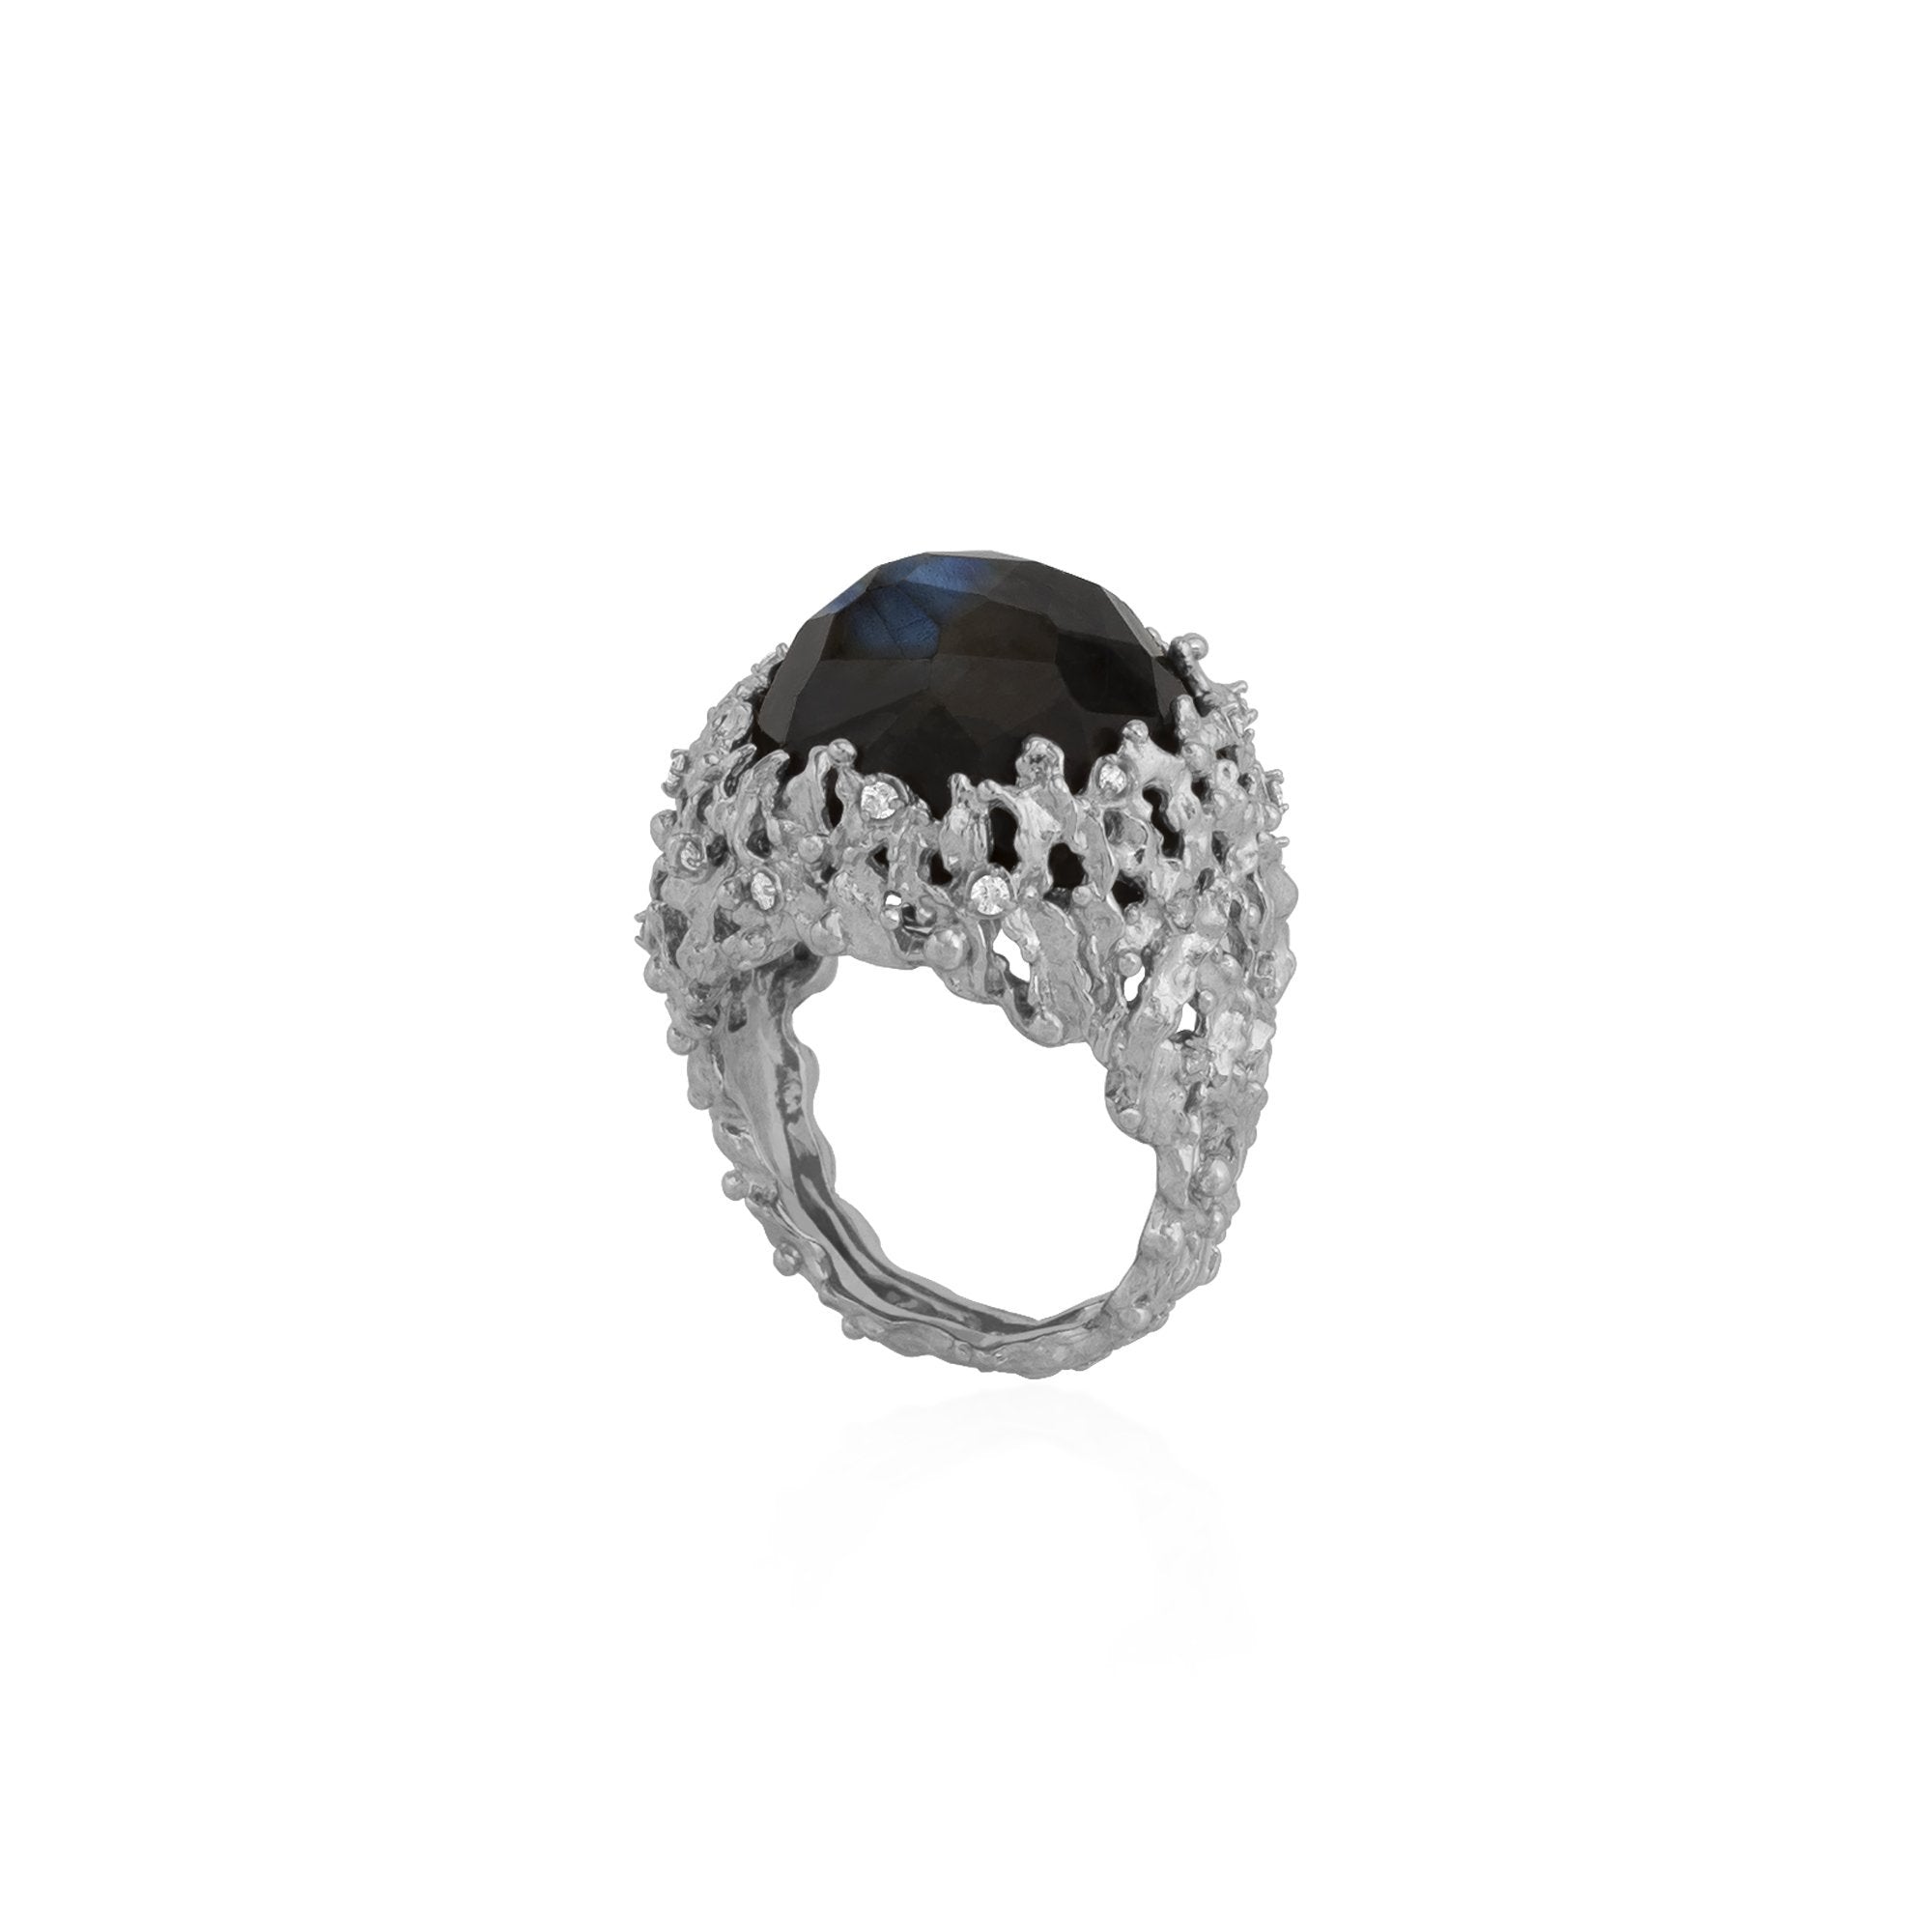 Michael Aram Ocean Ring with a Labradorite and Diamonds